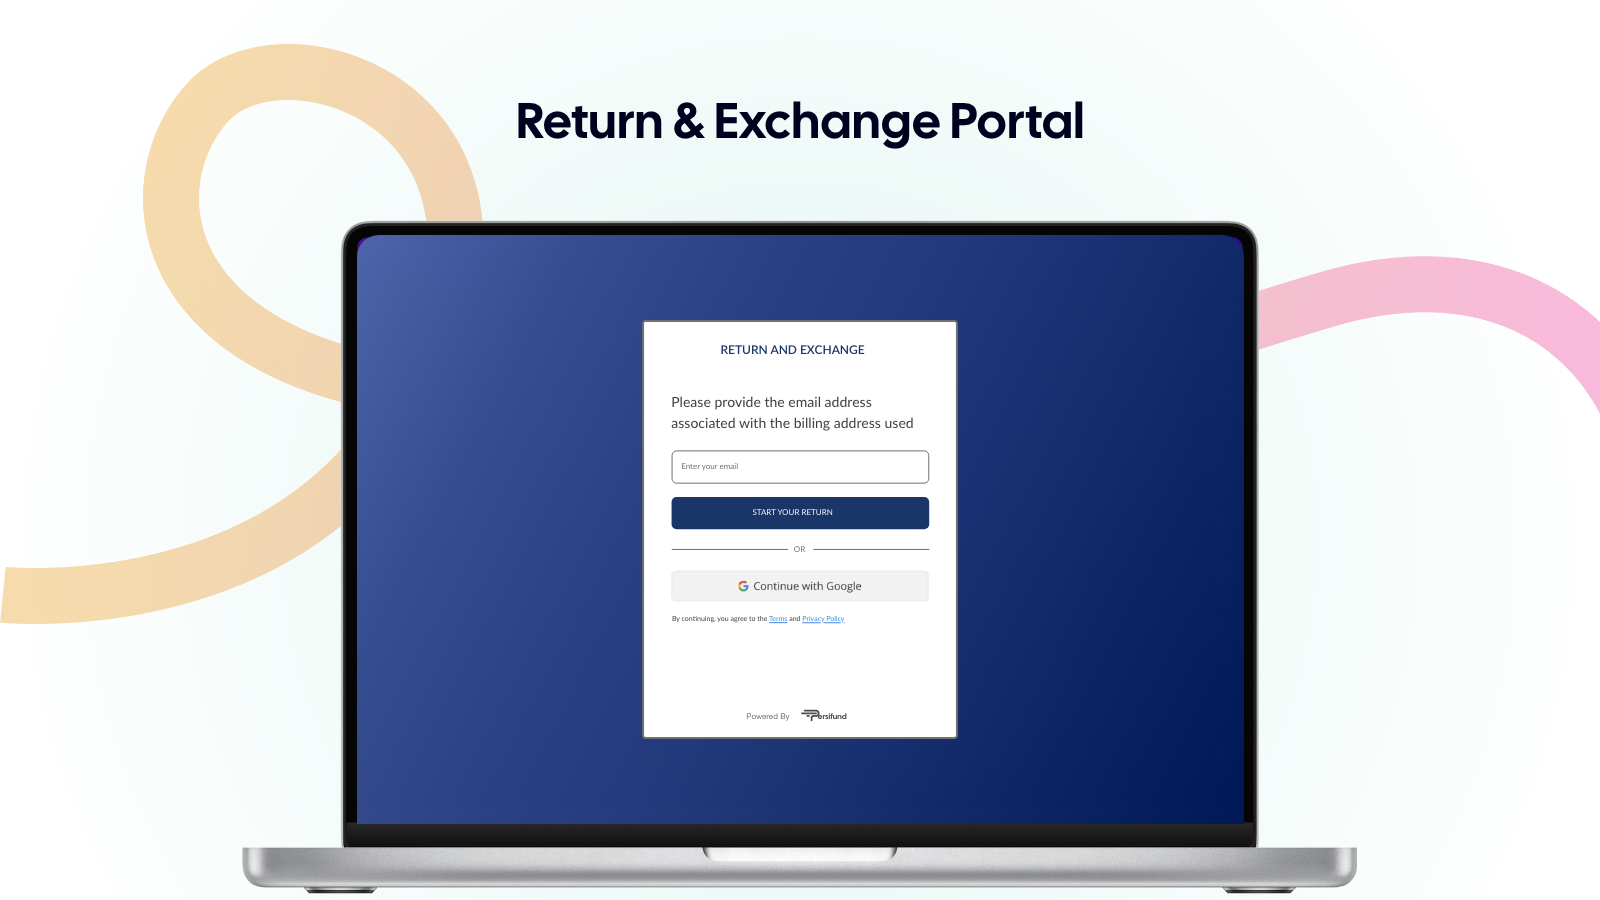 Return & Exchange Portal